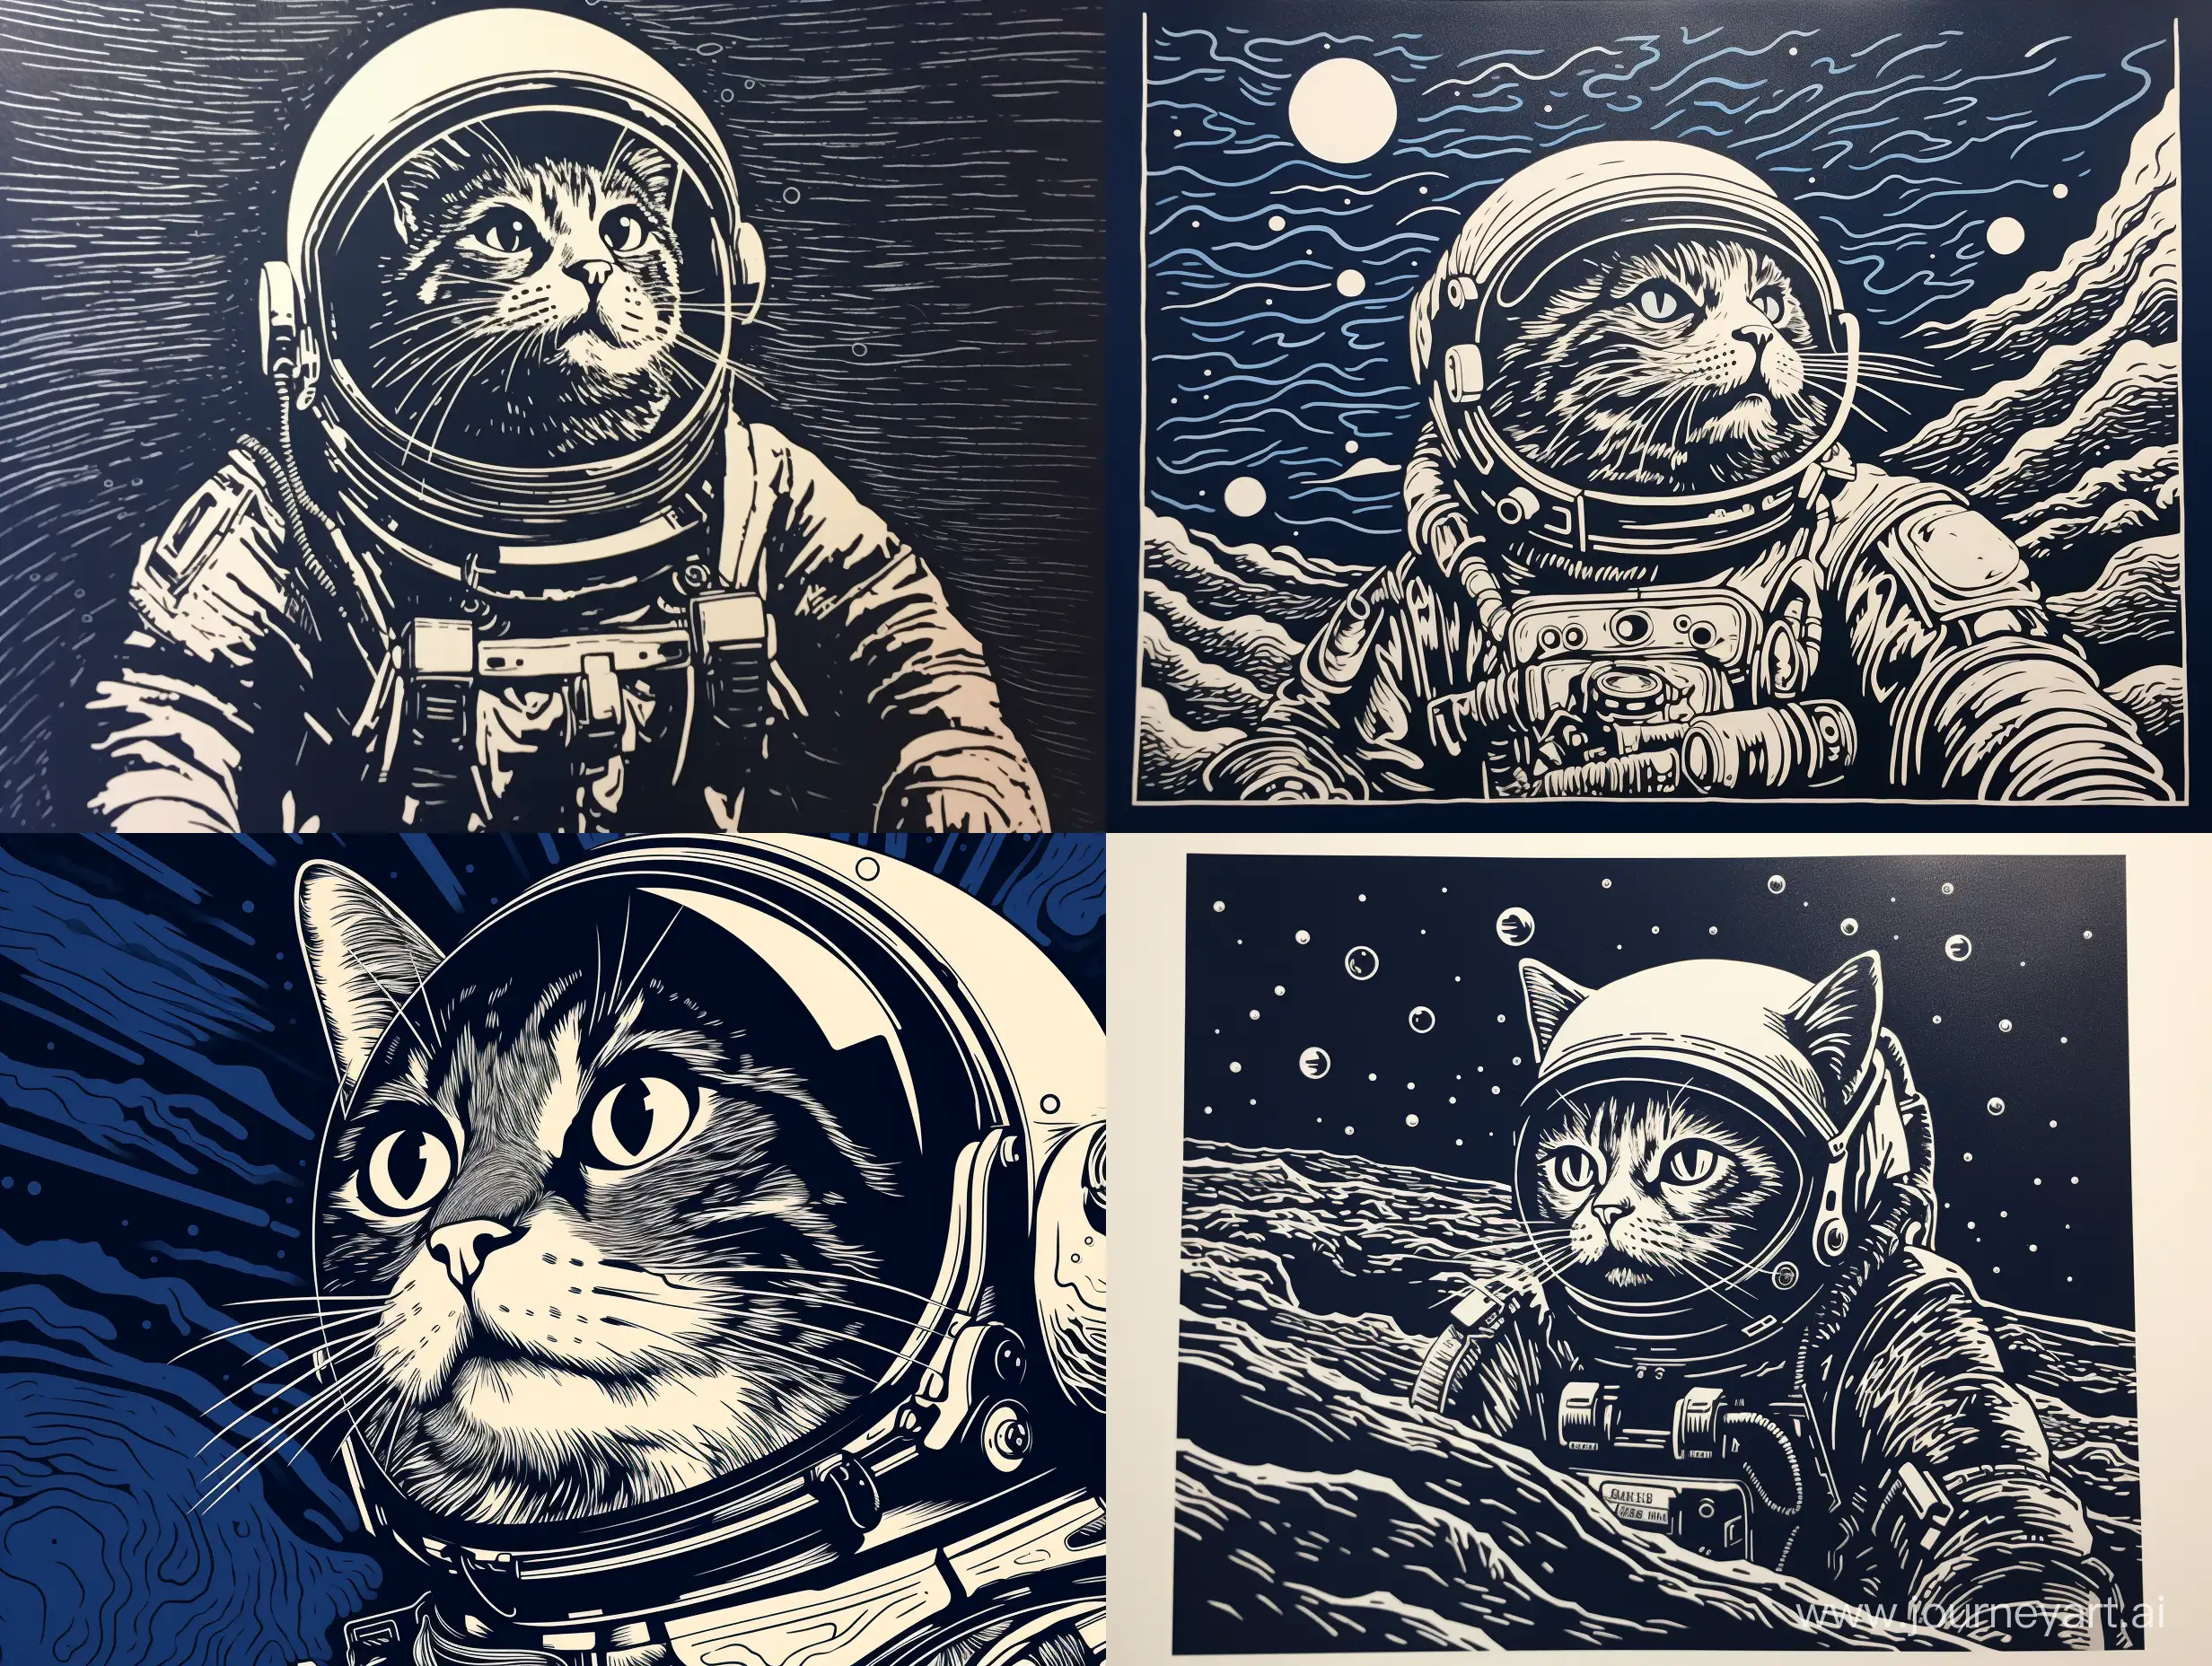 ContrastRich-Linocut-Floating-Astronaut-Cat-in-Striking-Monochrome